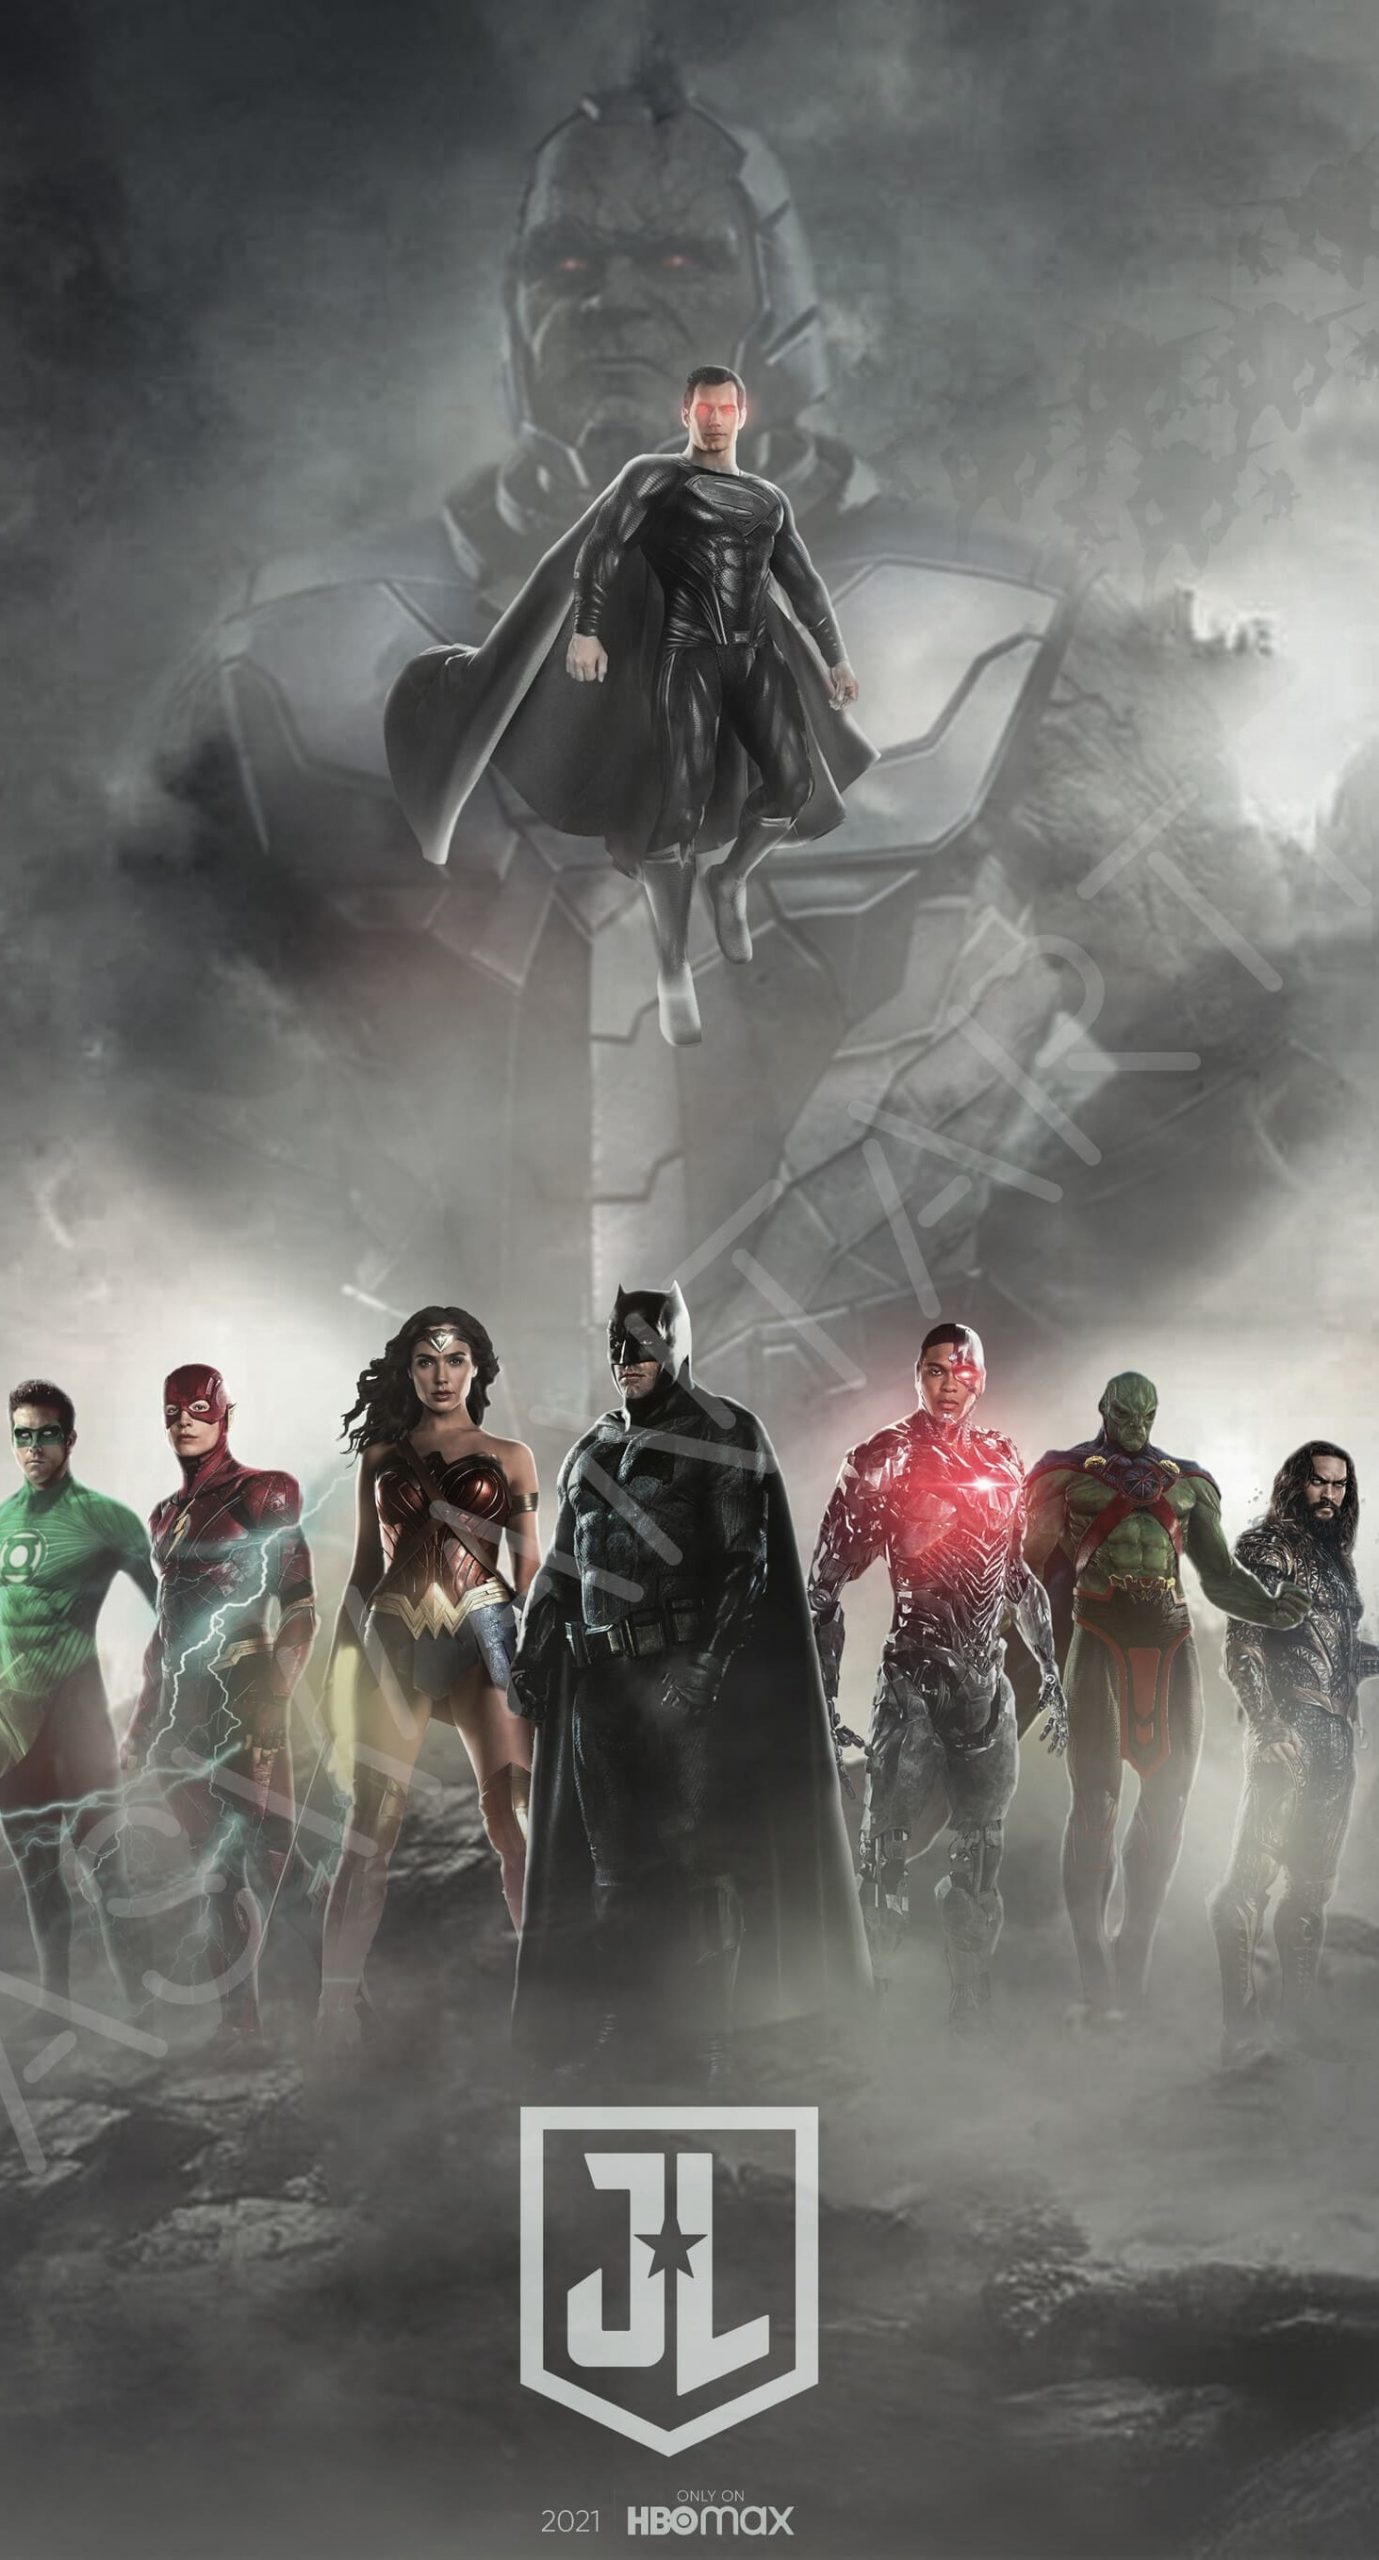 Zack Snyders Justice League Batman Wallpapers